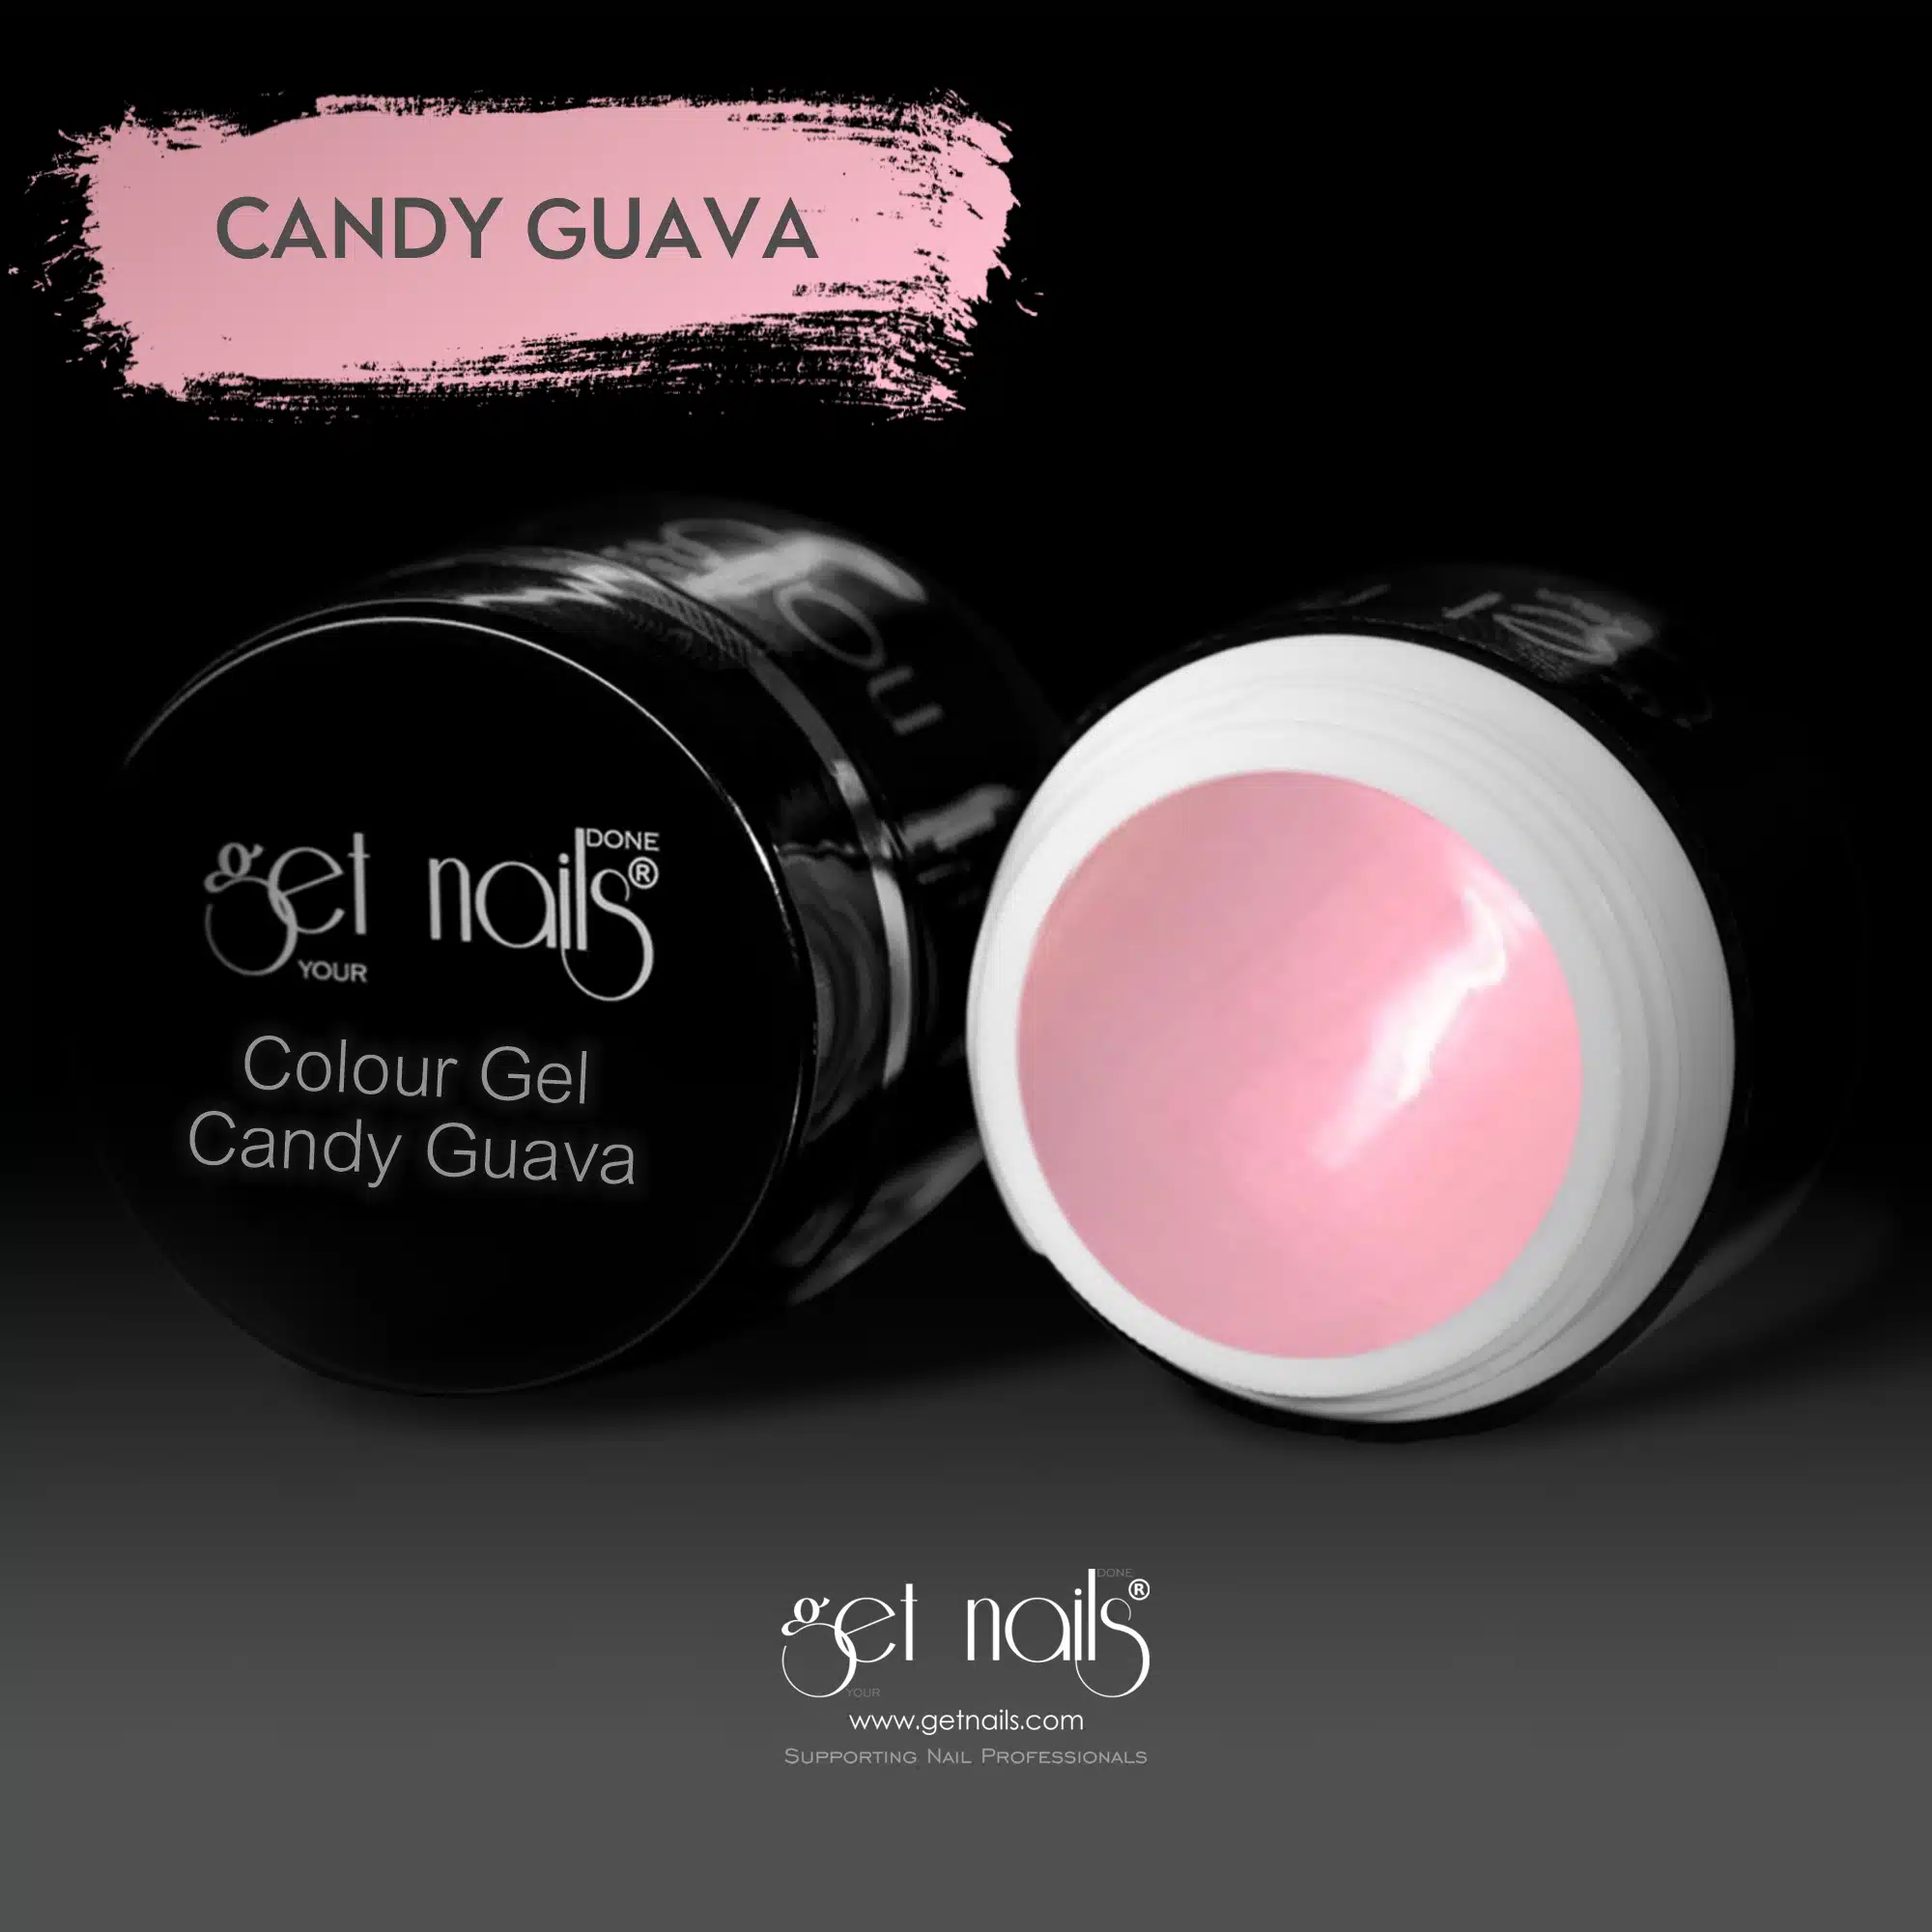 Get Nails Austria - Цветной гель Candy Guava 5g